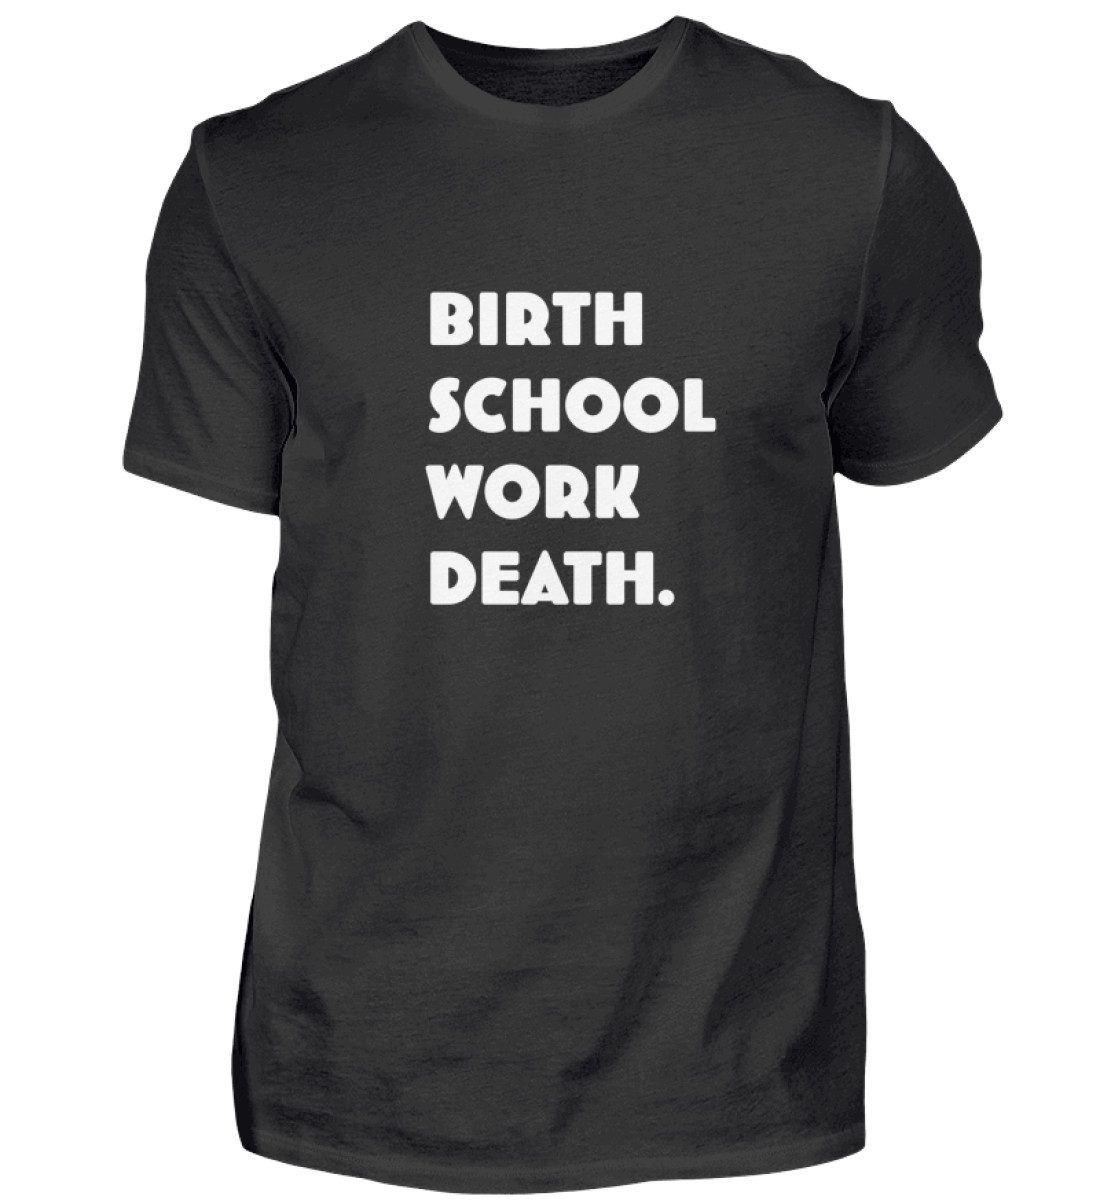 Birth School Work Death.